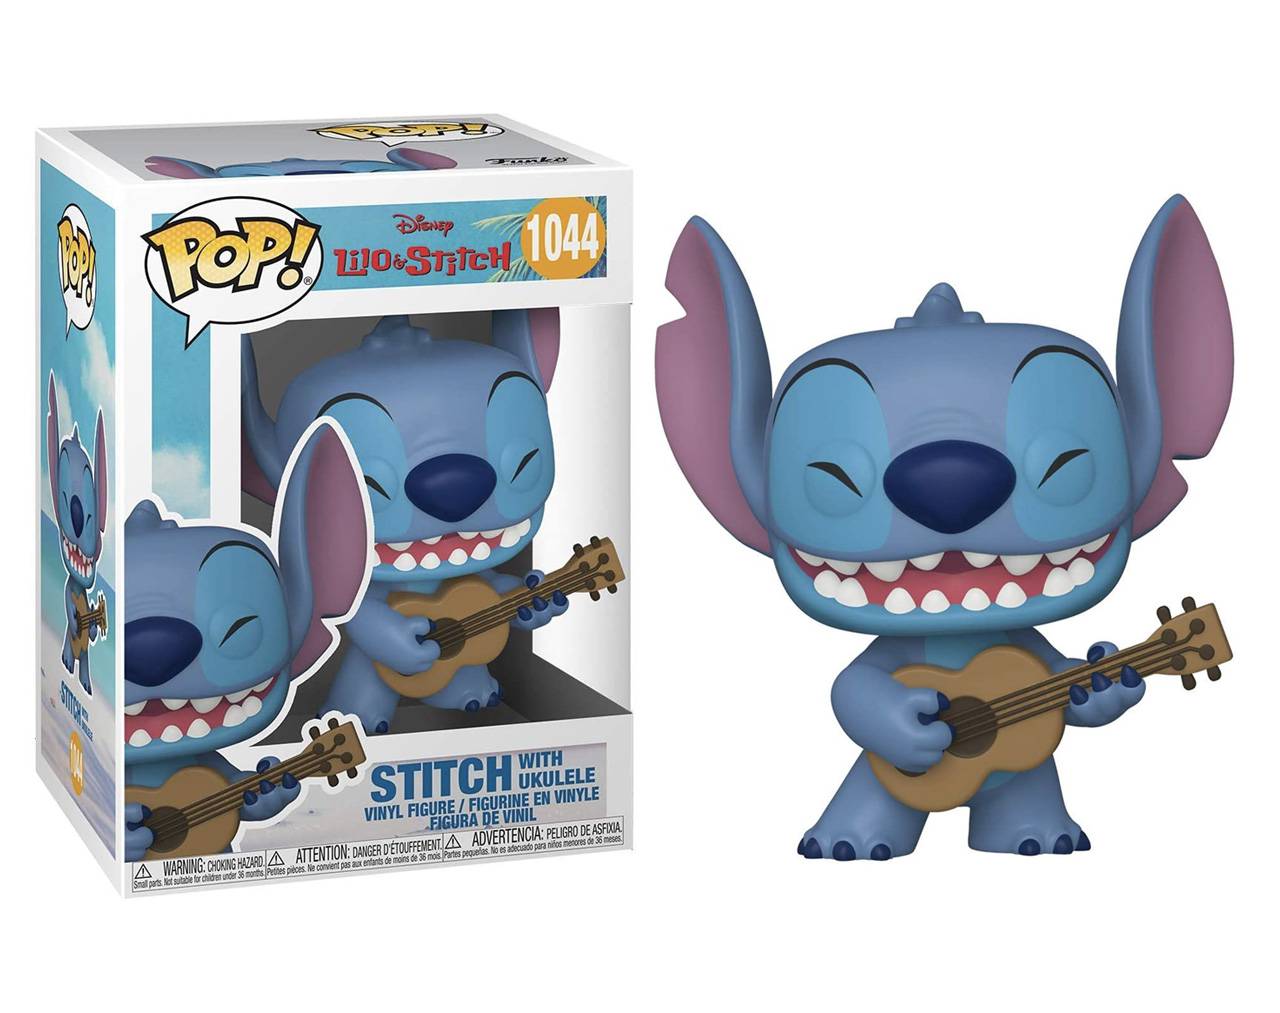 Stitch with Ukulele -Disney's Lilo & Stitch Pop! Vinyl